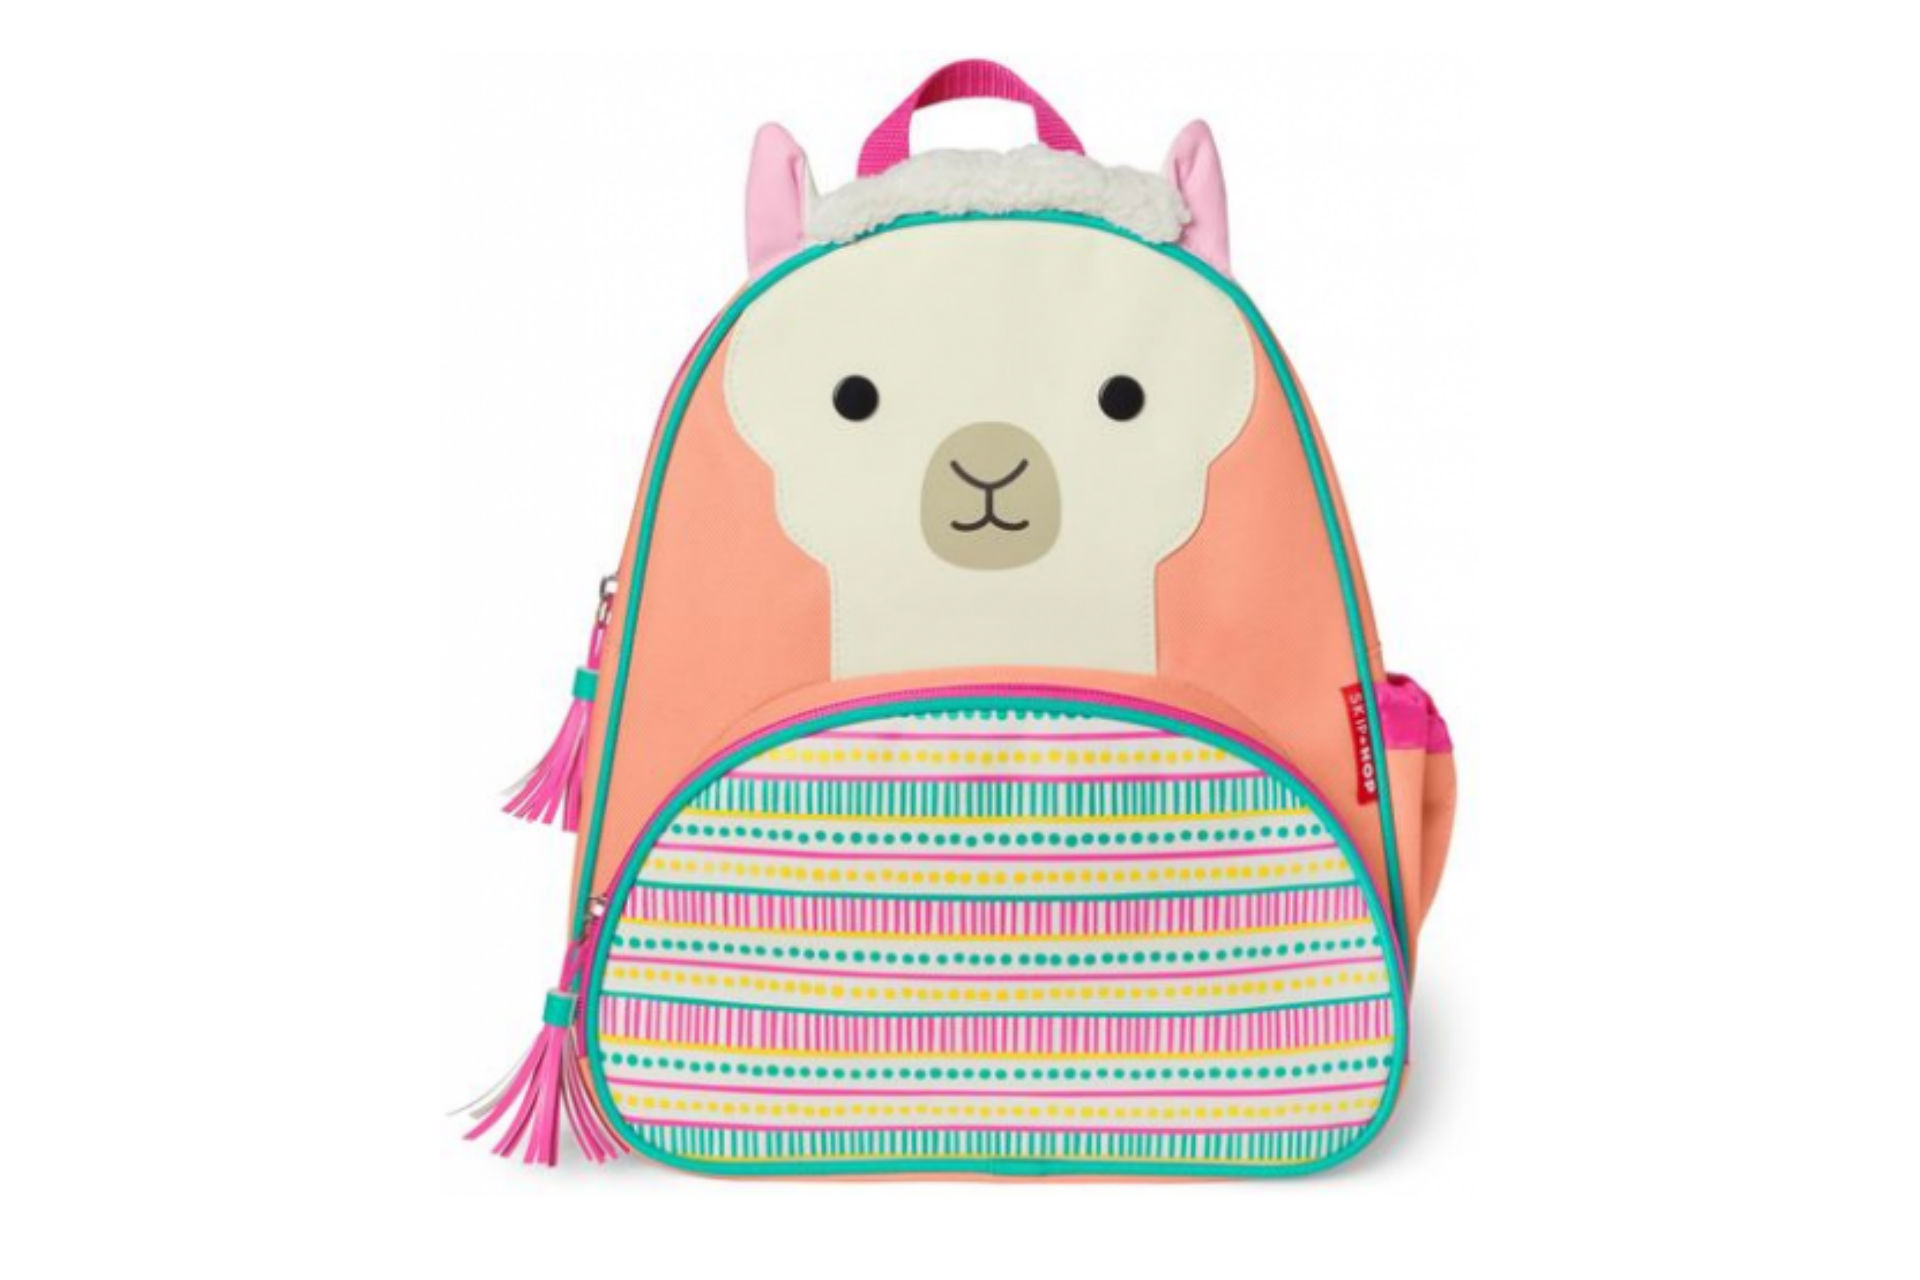 llama on a colourful backpack